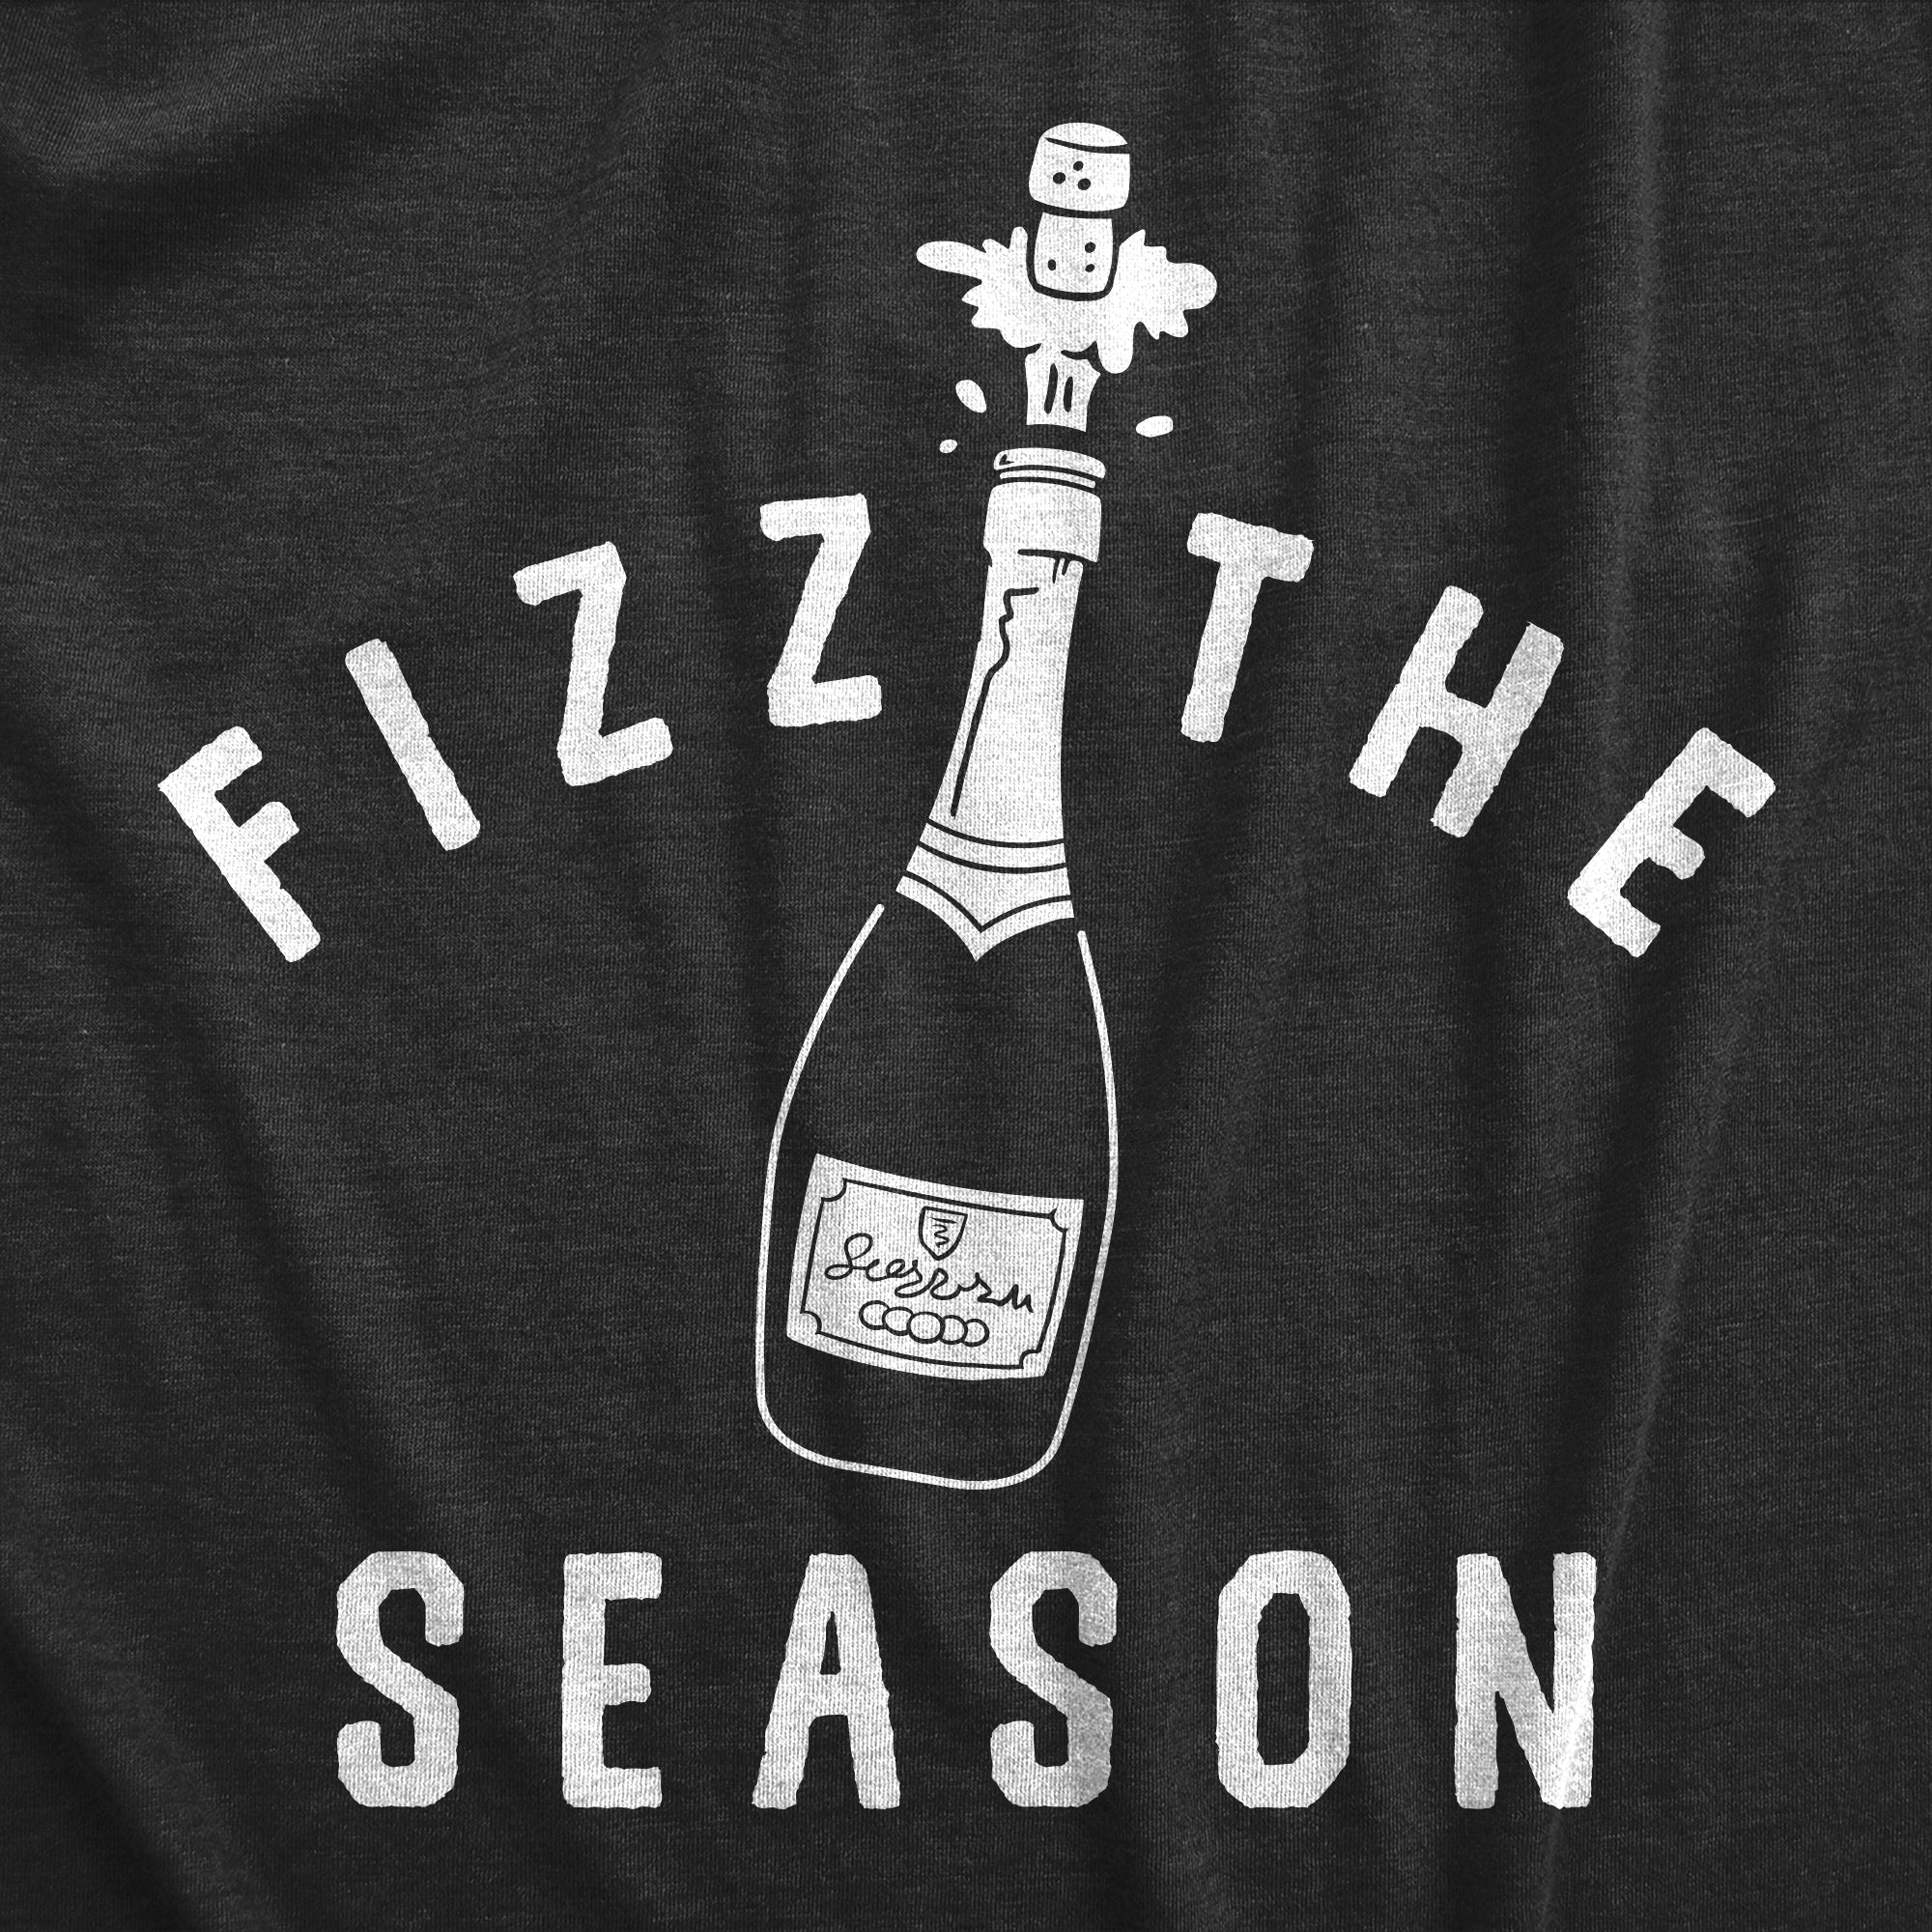 Funny Heather Black - FIZZ Fizz The Season Mens T Shirt Nerdy New Years Drinking Tee